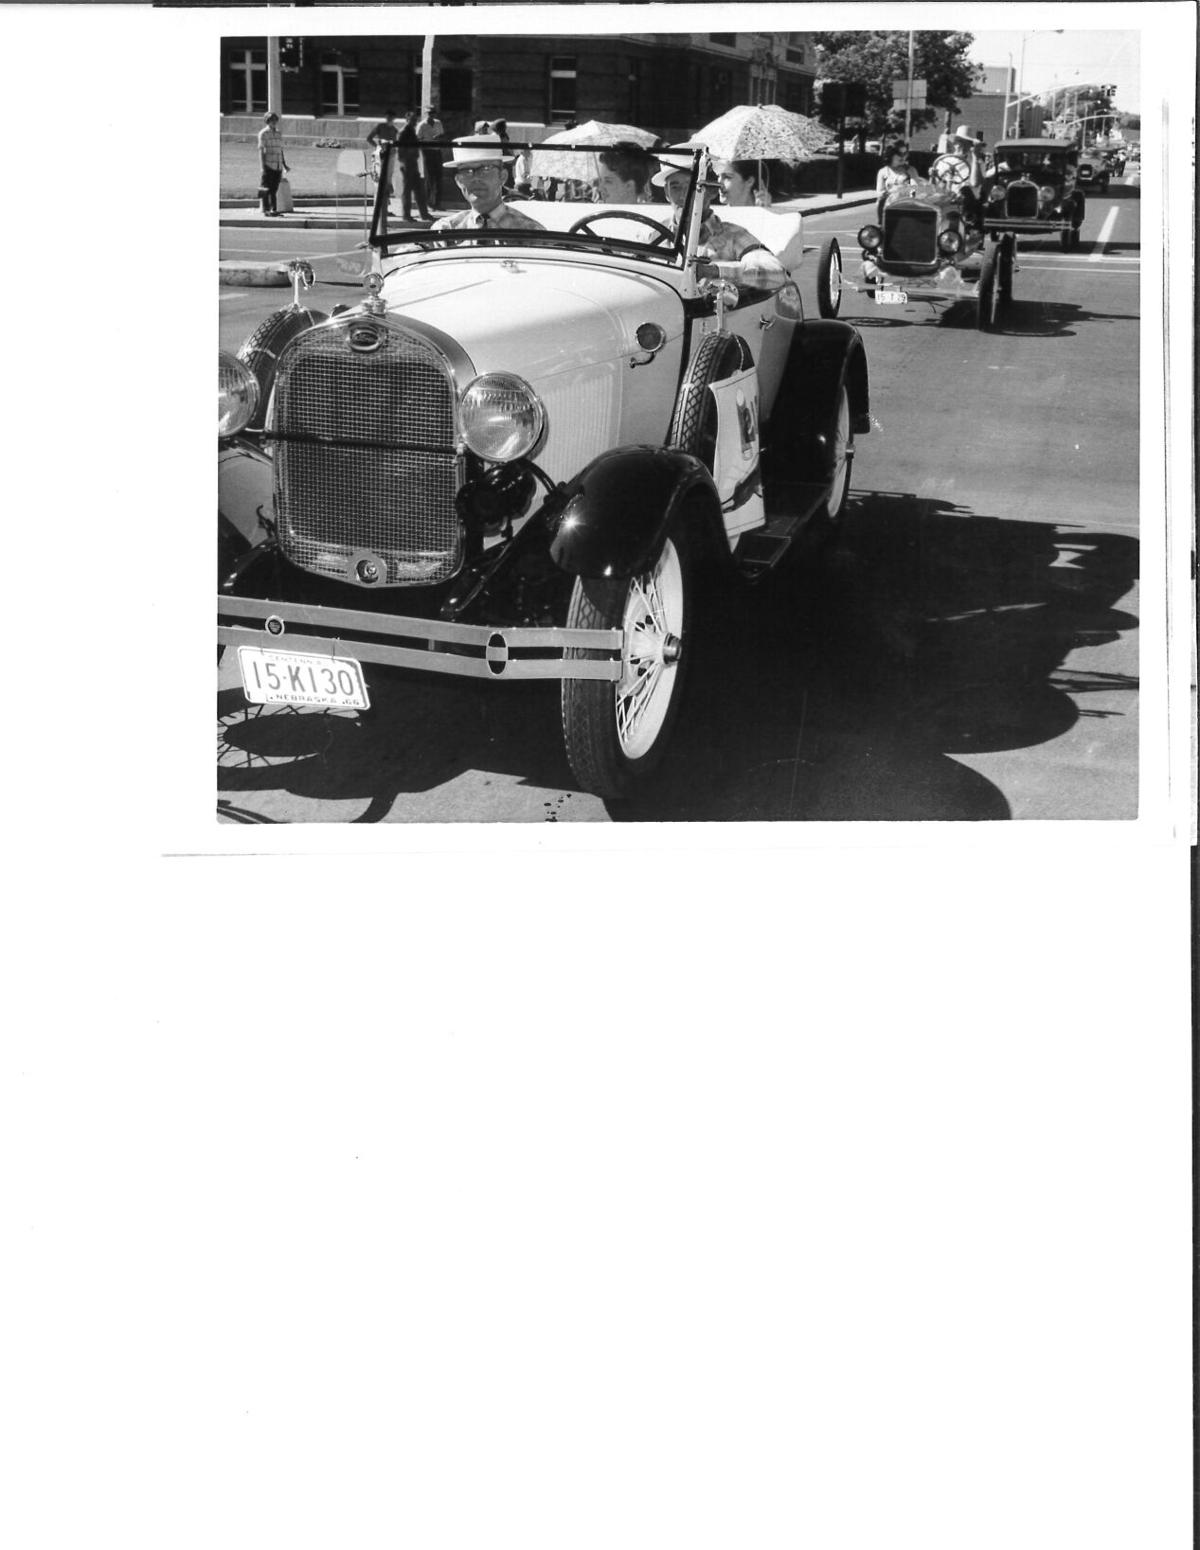 88  Nebraskaland days antique car parade for iPad Wallpaper